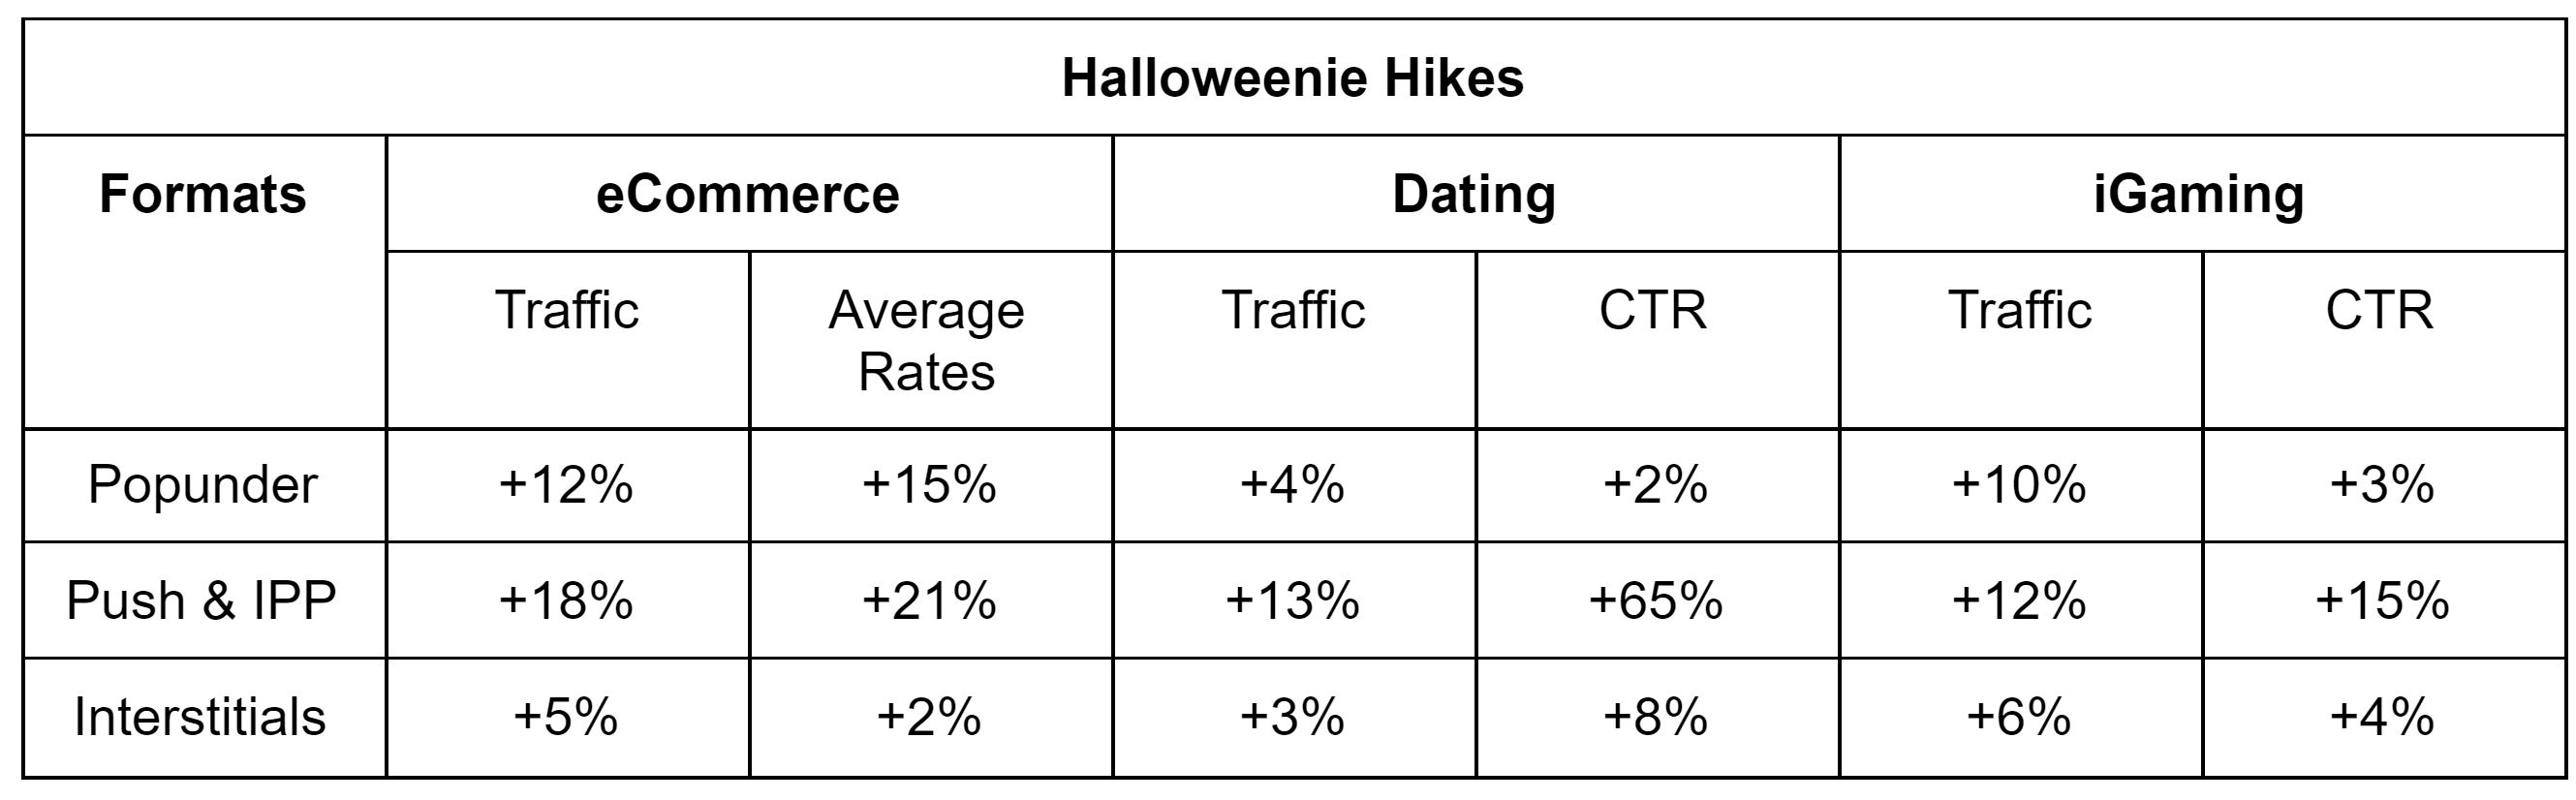 PropellerAds - Halloween Hikes - CTR, rates, traffic